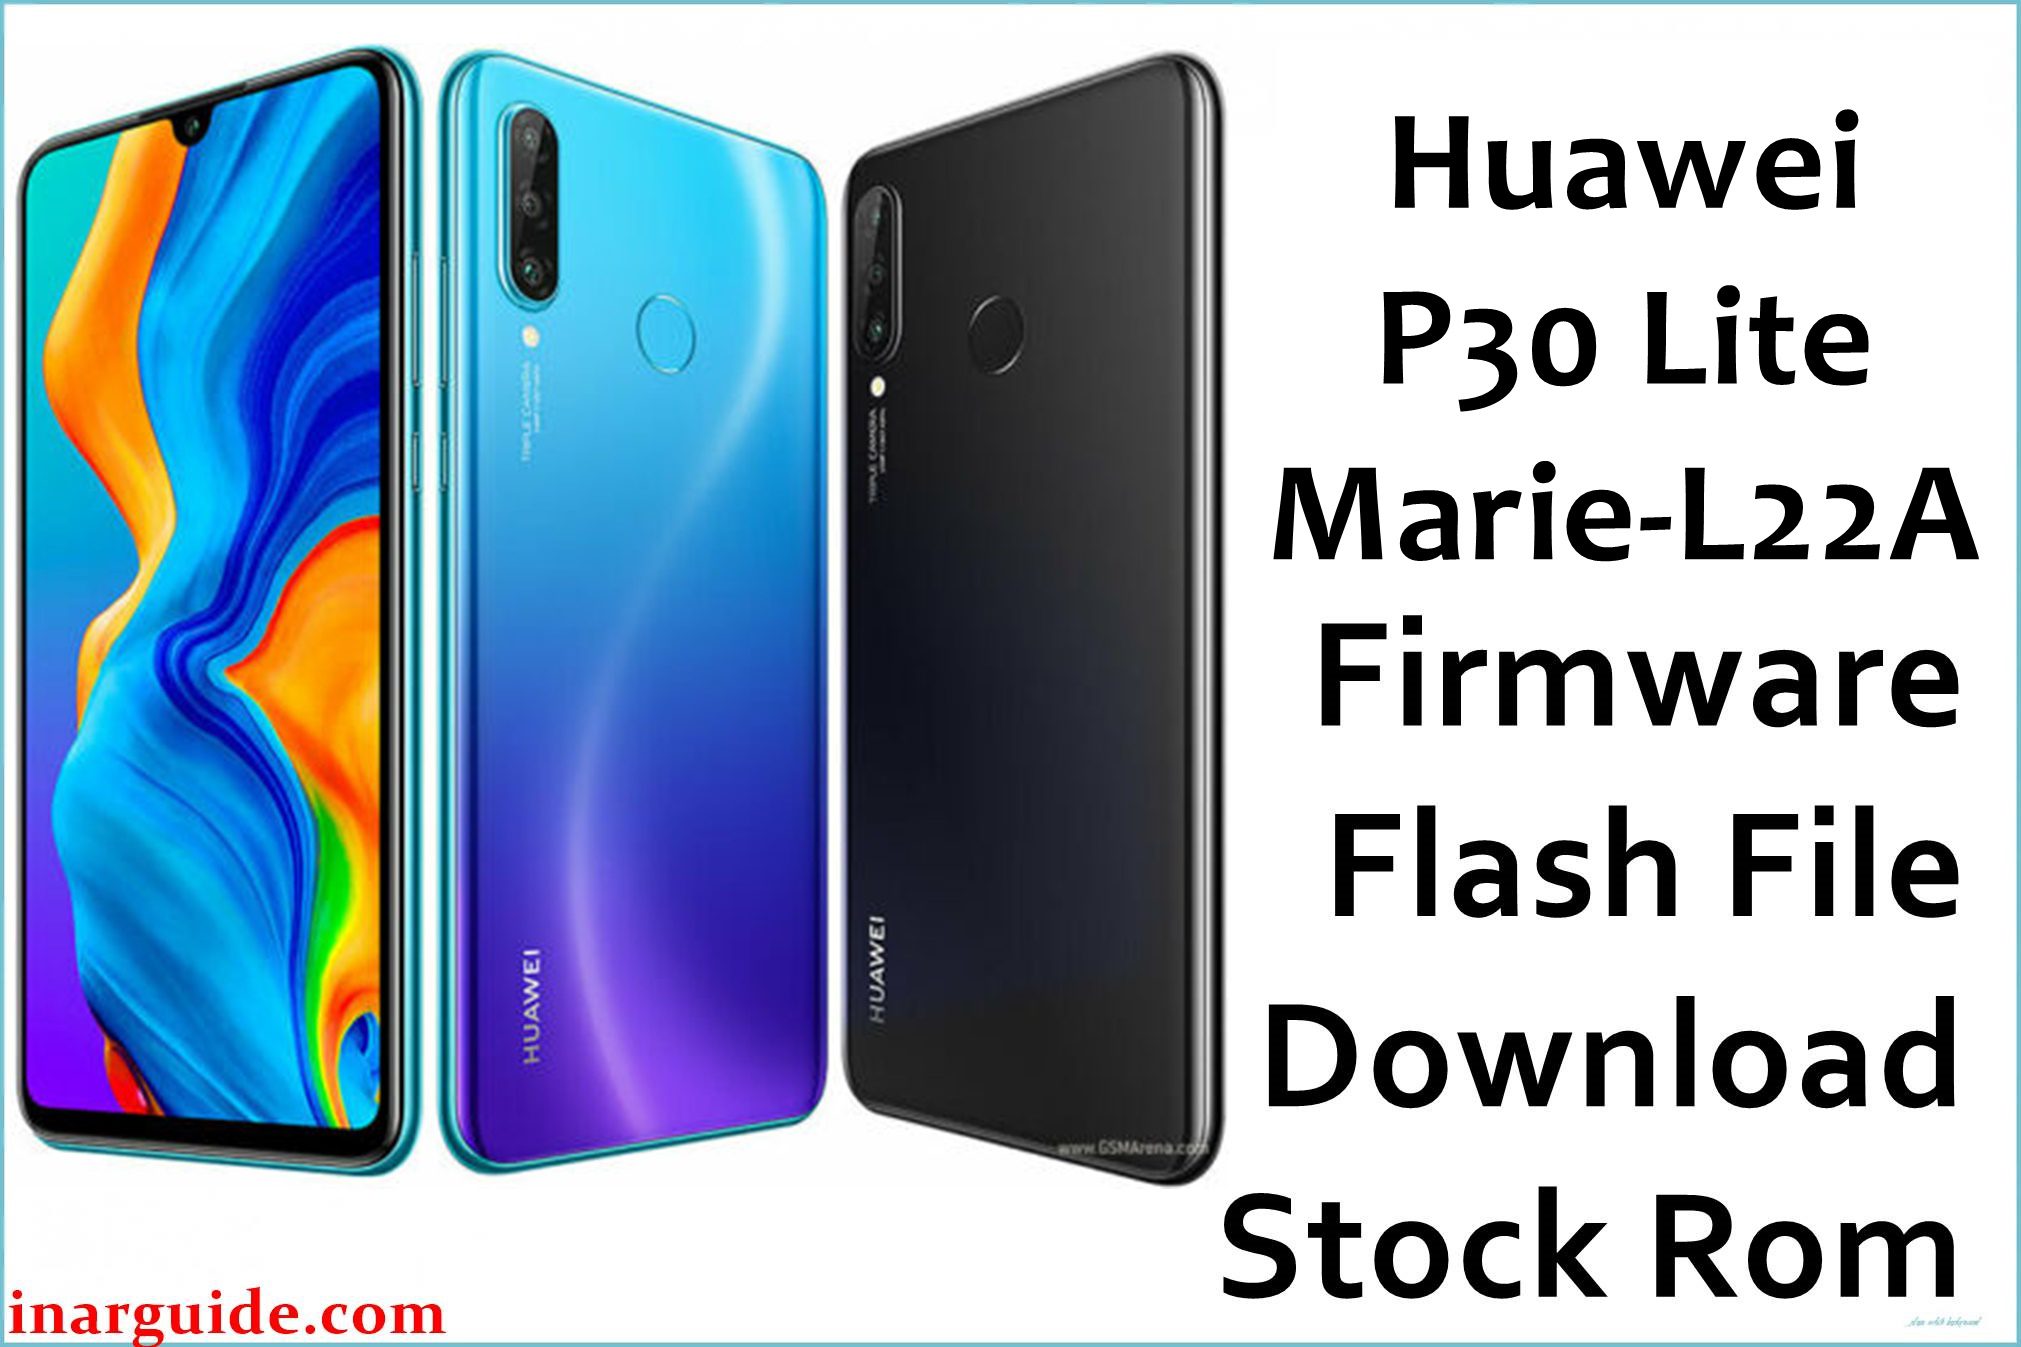 Huawei P30 Lite Marie L22A